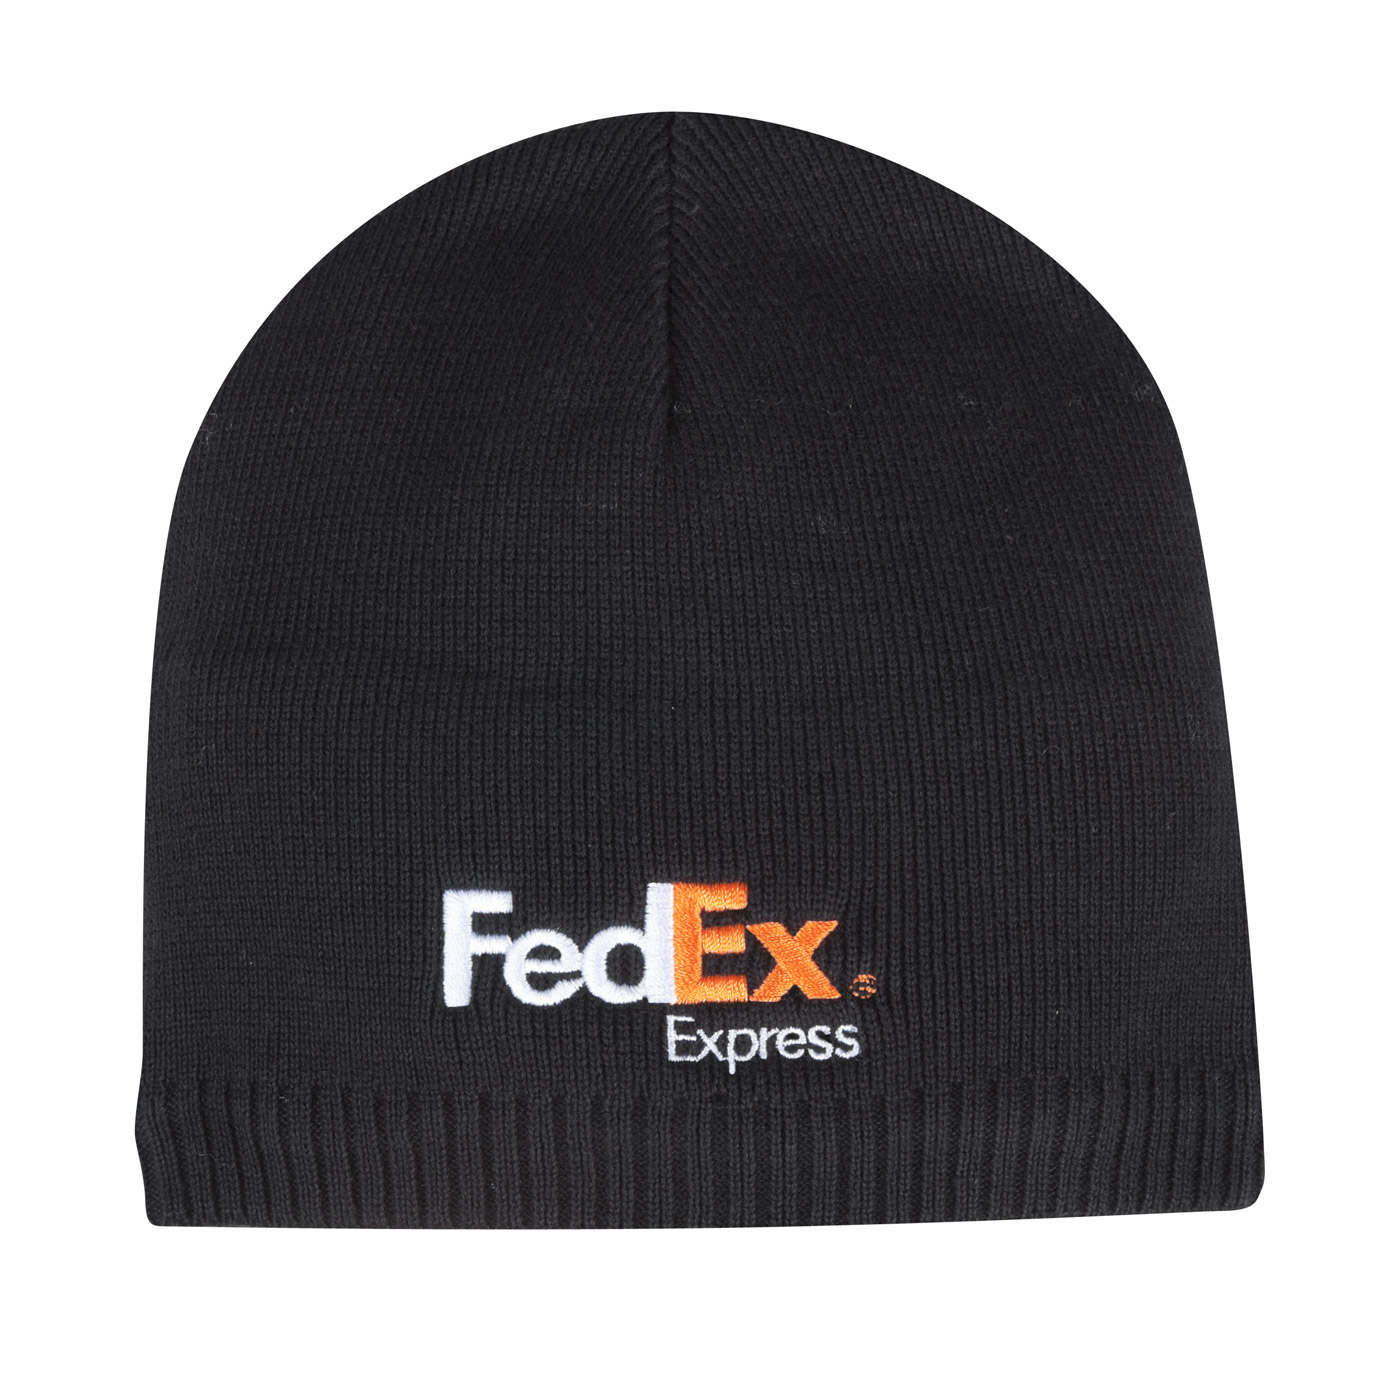 FedEx Express Knit Beanie The FedEx Company Store